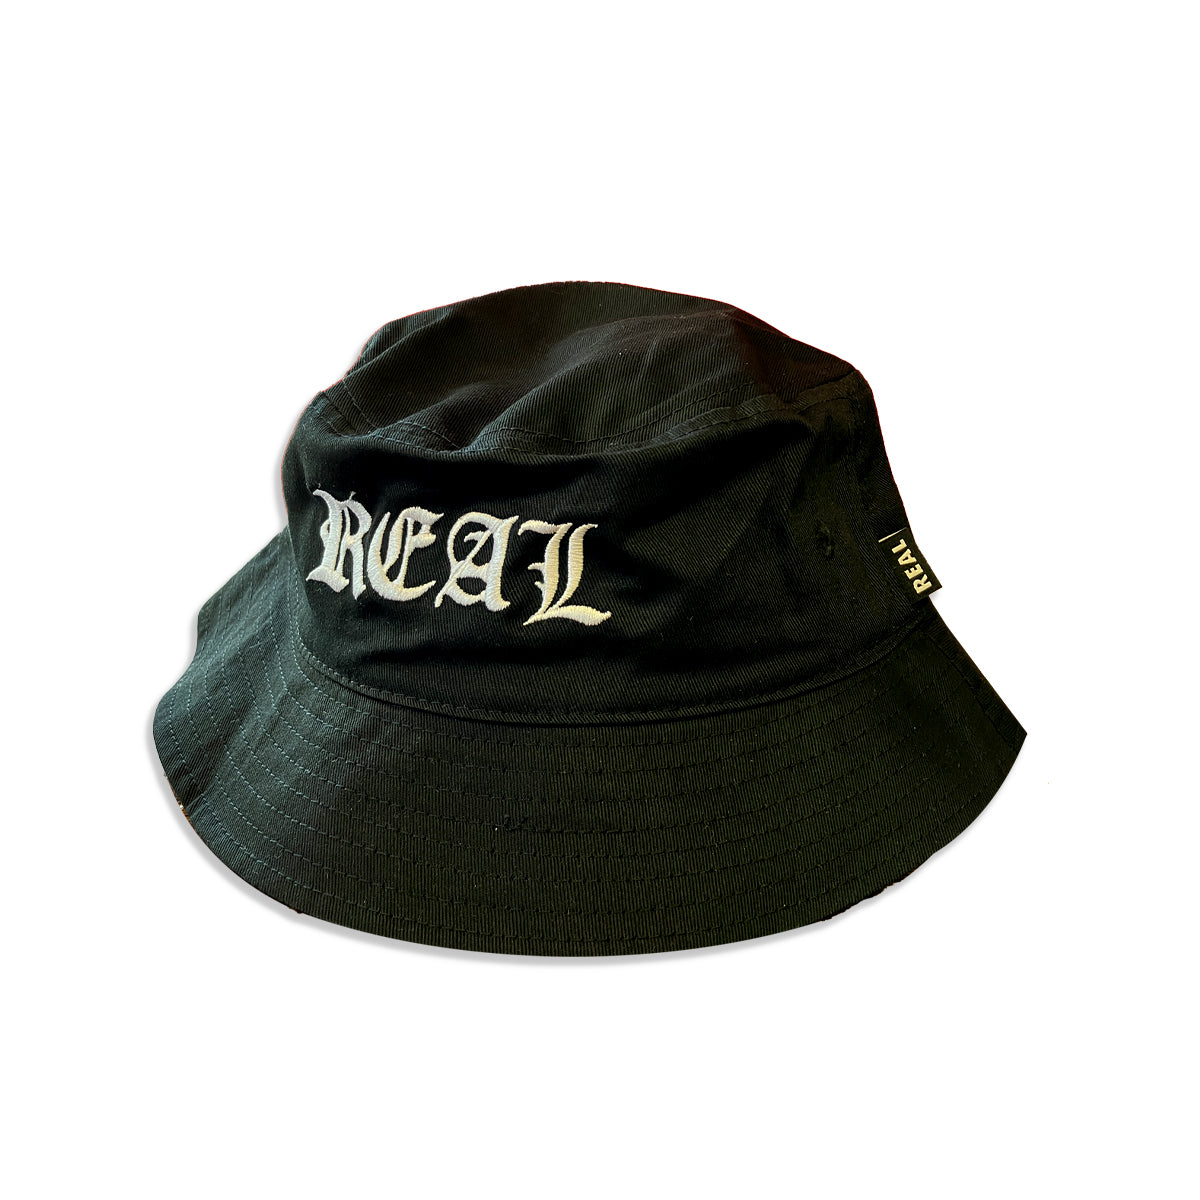 Real Script Bucket Hat (Black) - Apple Valley Emporium